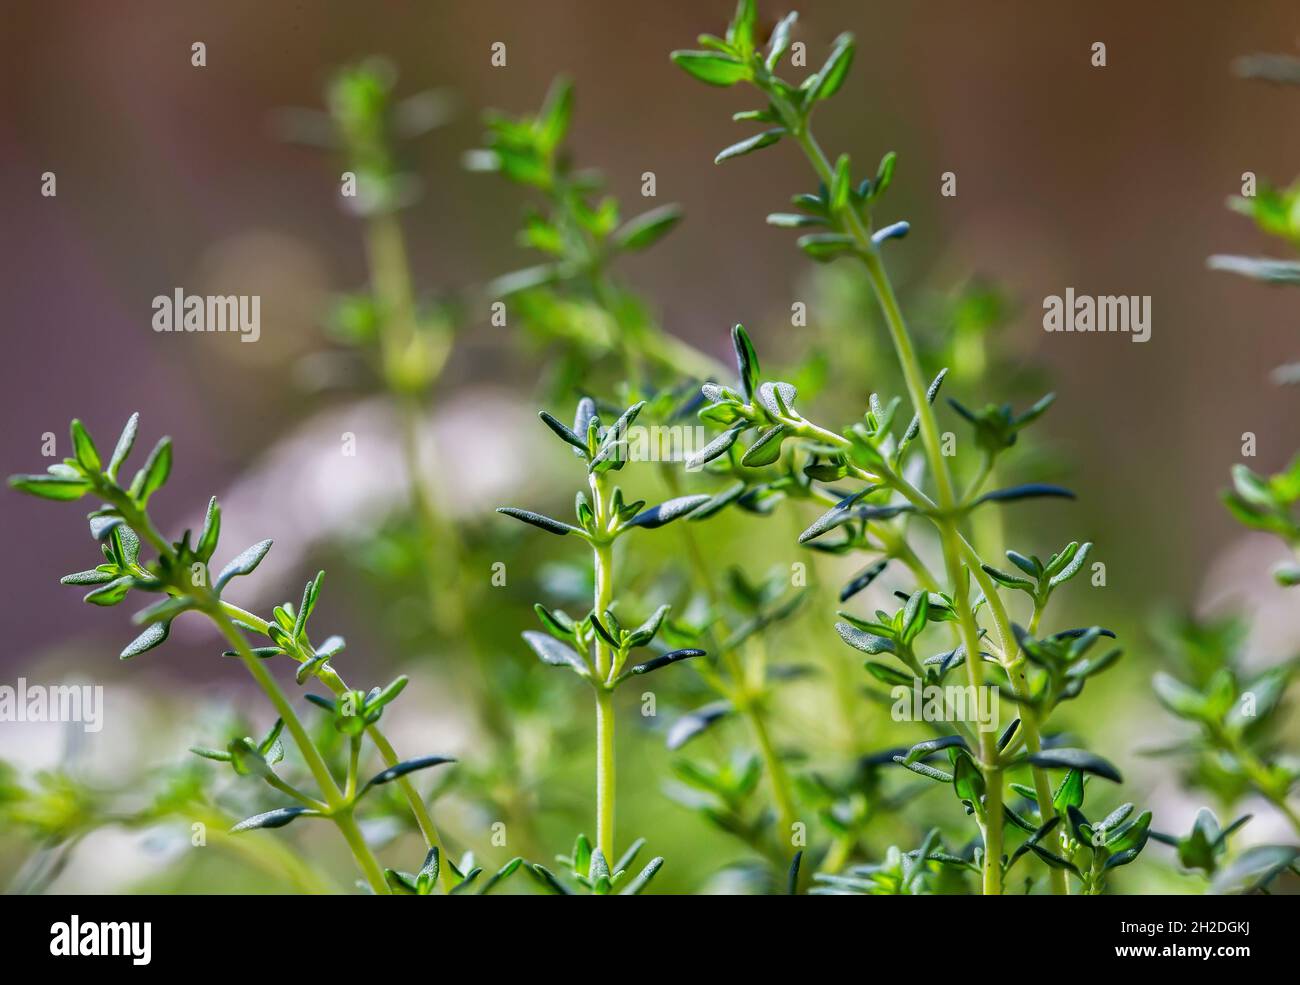 Closeup of thyme plants Stock Photo